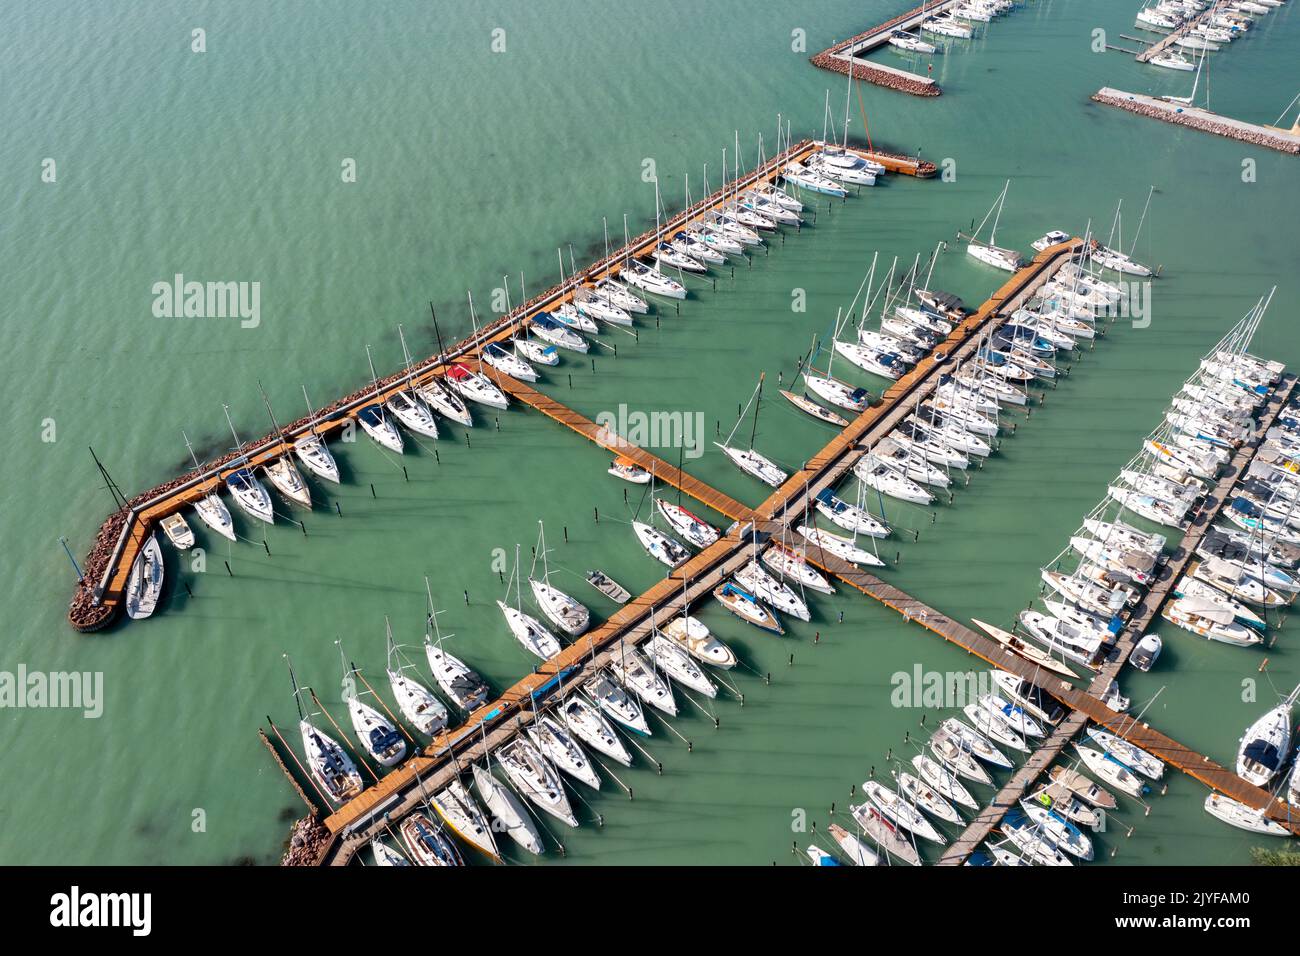 přístav, Siofok - rekreační oblast, Jezero Balaton, Maďarsko / harbour, Siofok town recreation area, Balaton lake, Hungary, Europe Stock Photo